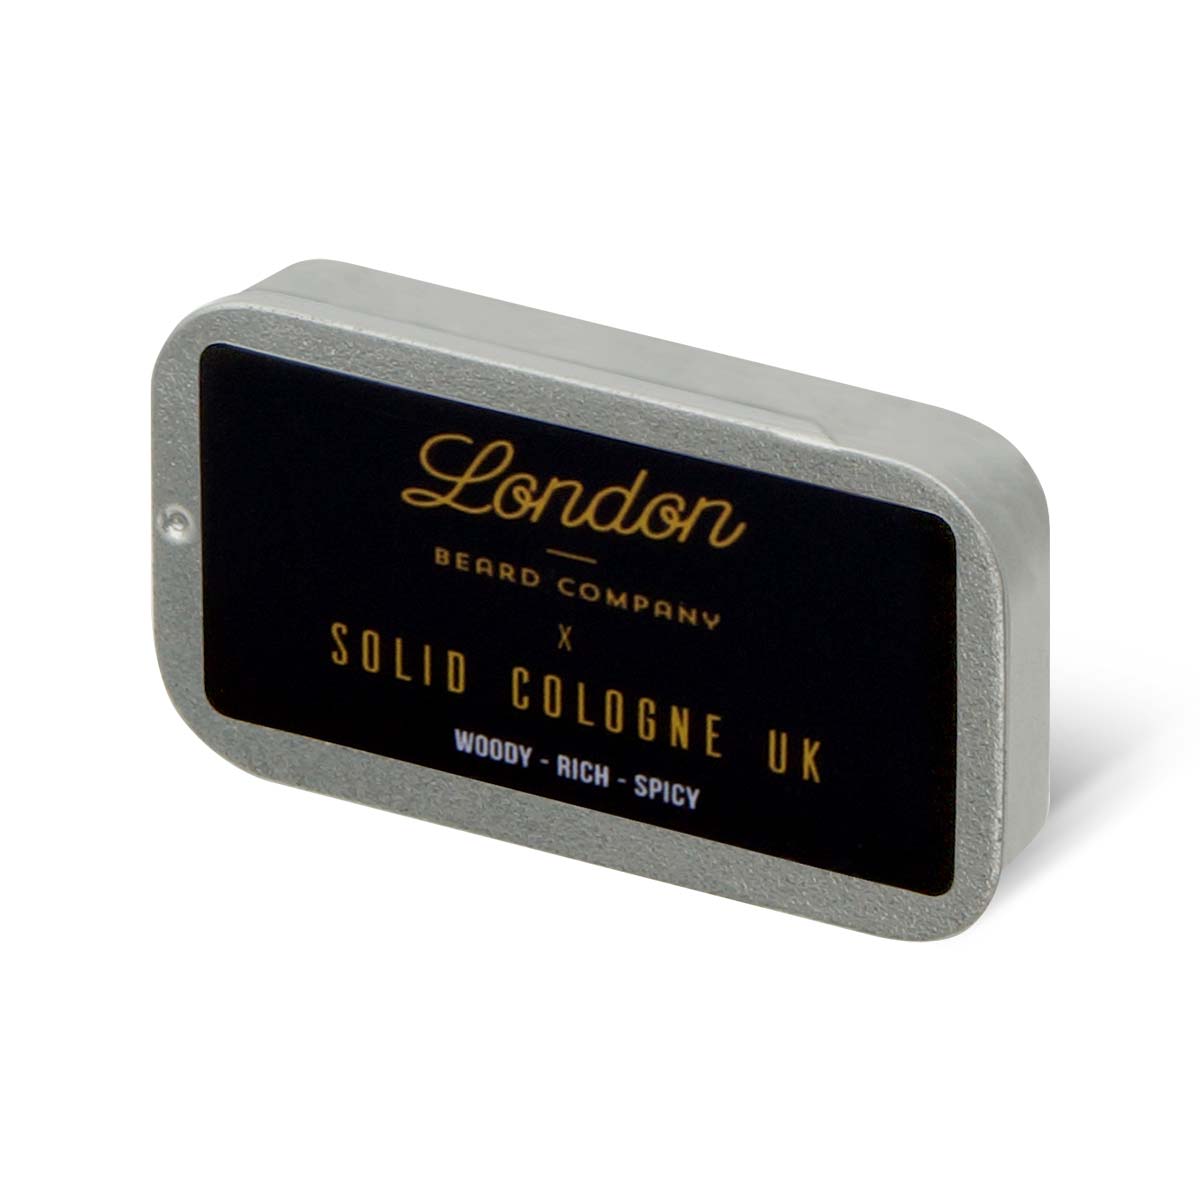 Solid Cologne UK X London Beard Company (練り香水 メンズ) 18ml-p_1